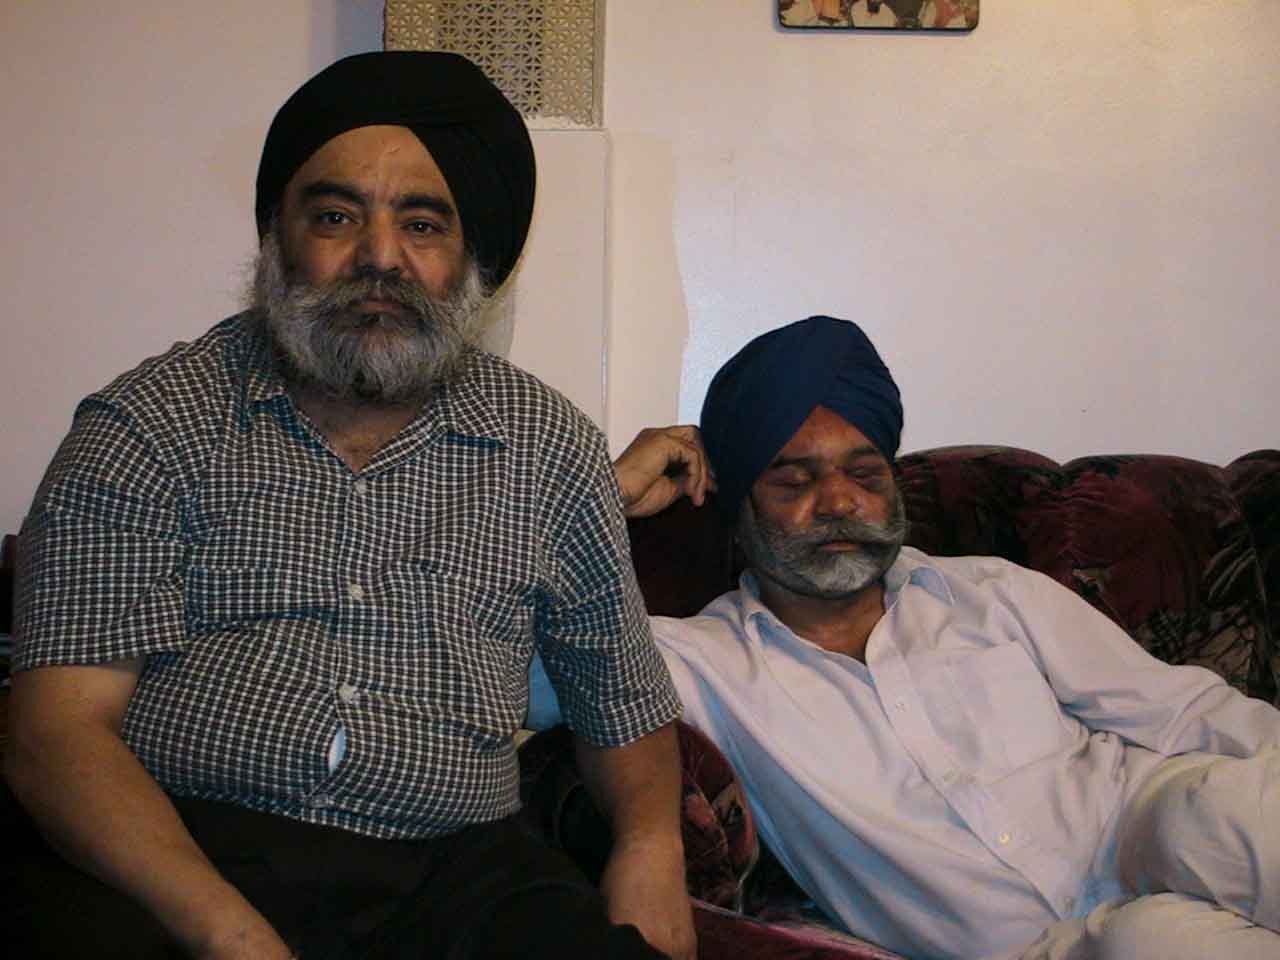 Rajinder Singh and Gurcharan Singh – both victims of the attack.